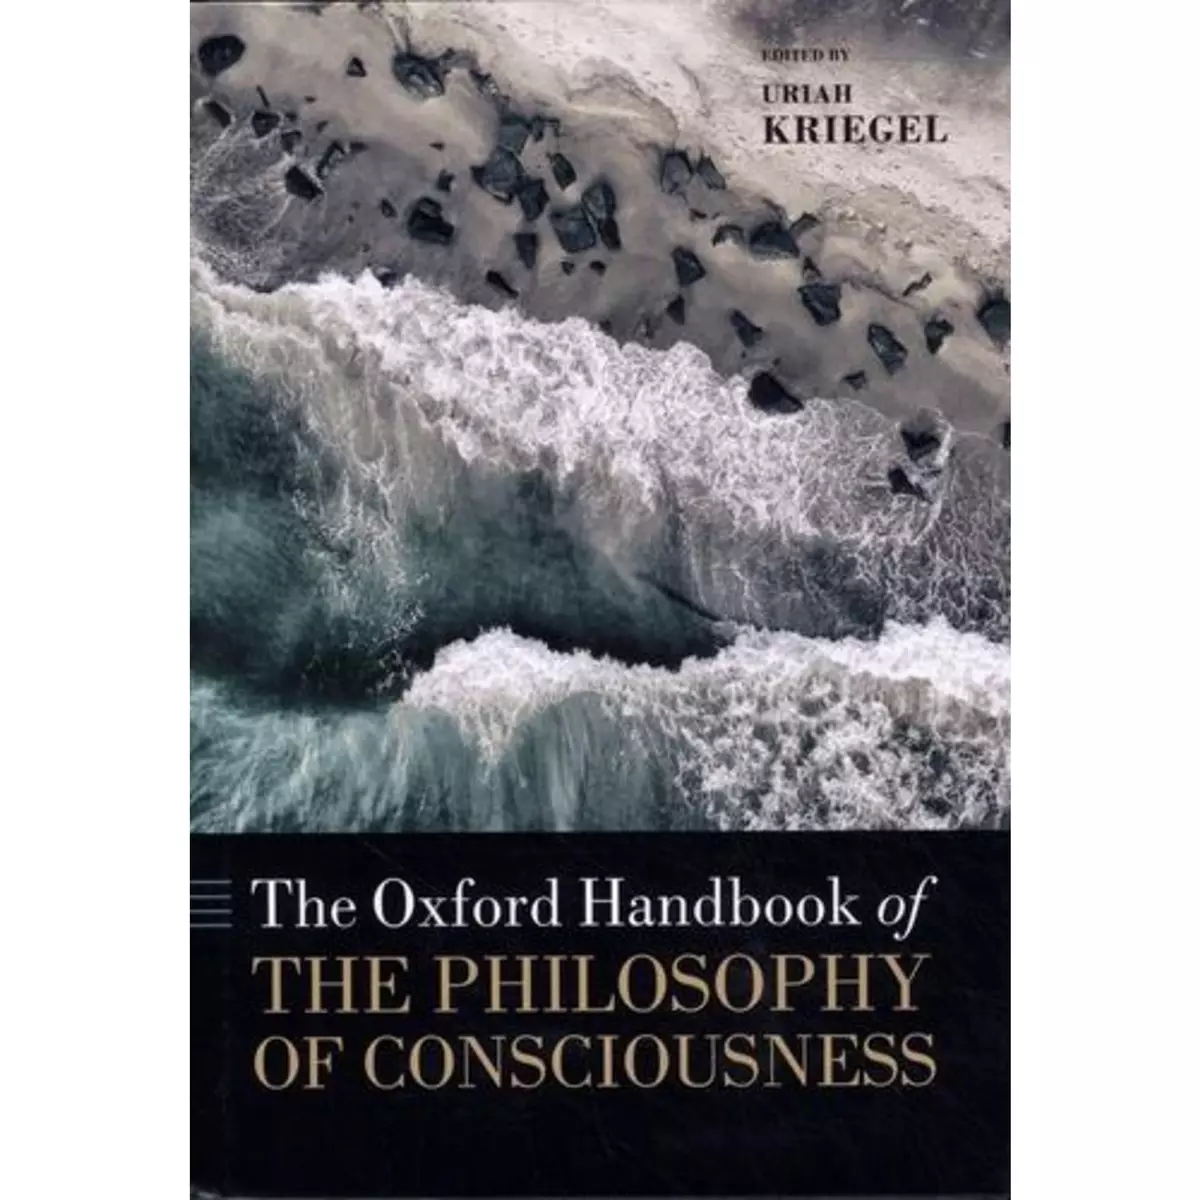  THE OXFORD HANDBOOK OF THE PHILOSOPHY OF CONSCIOUSNESS. EDITION EN ANGLAIS, Kriegel Uriah